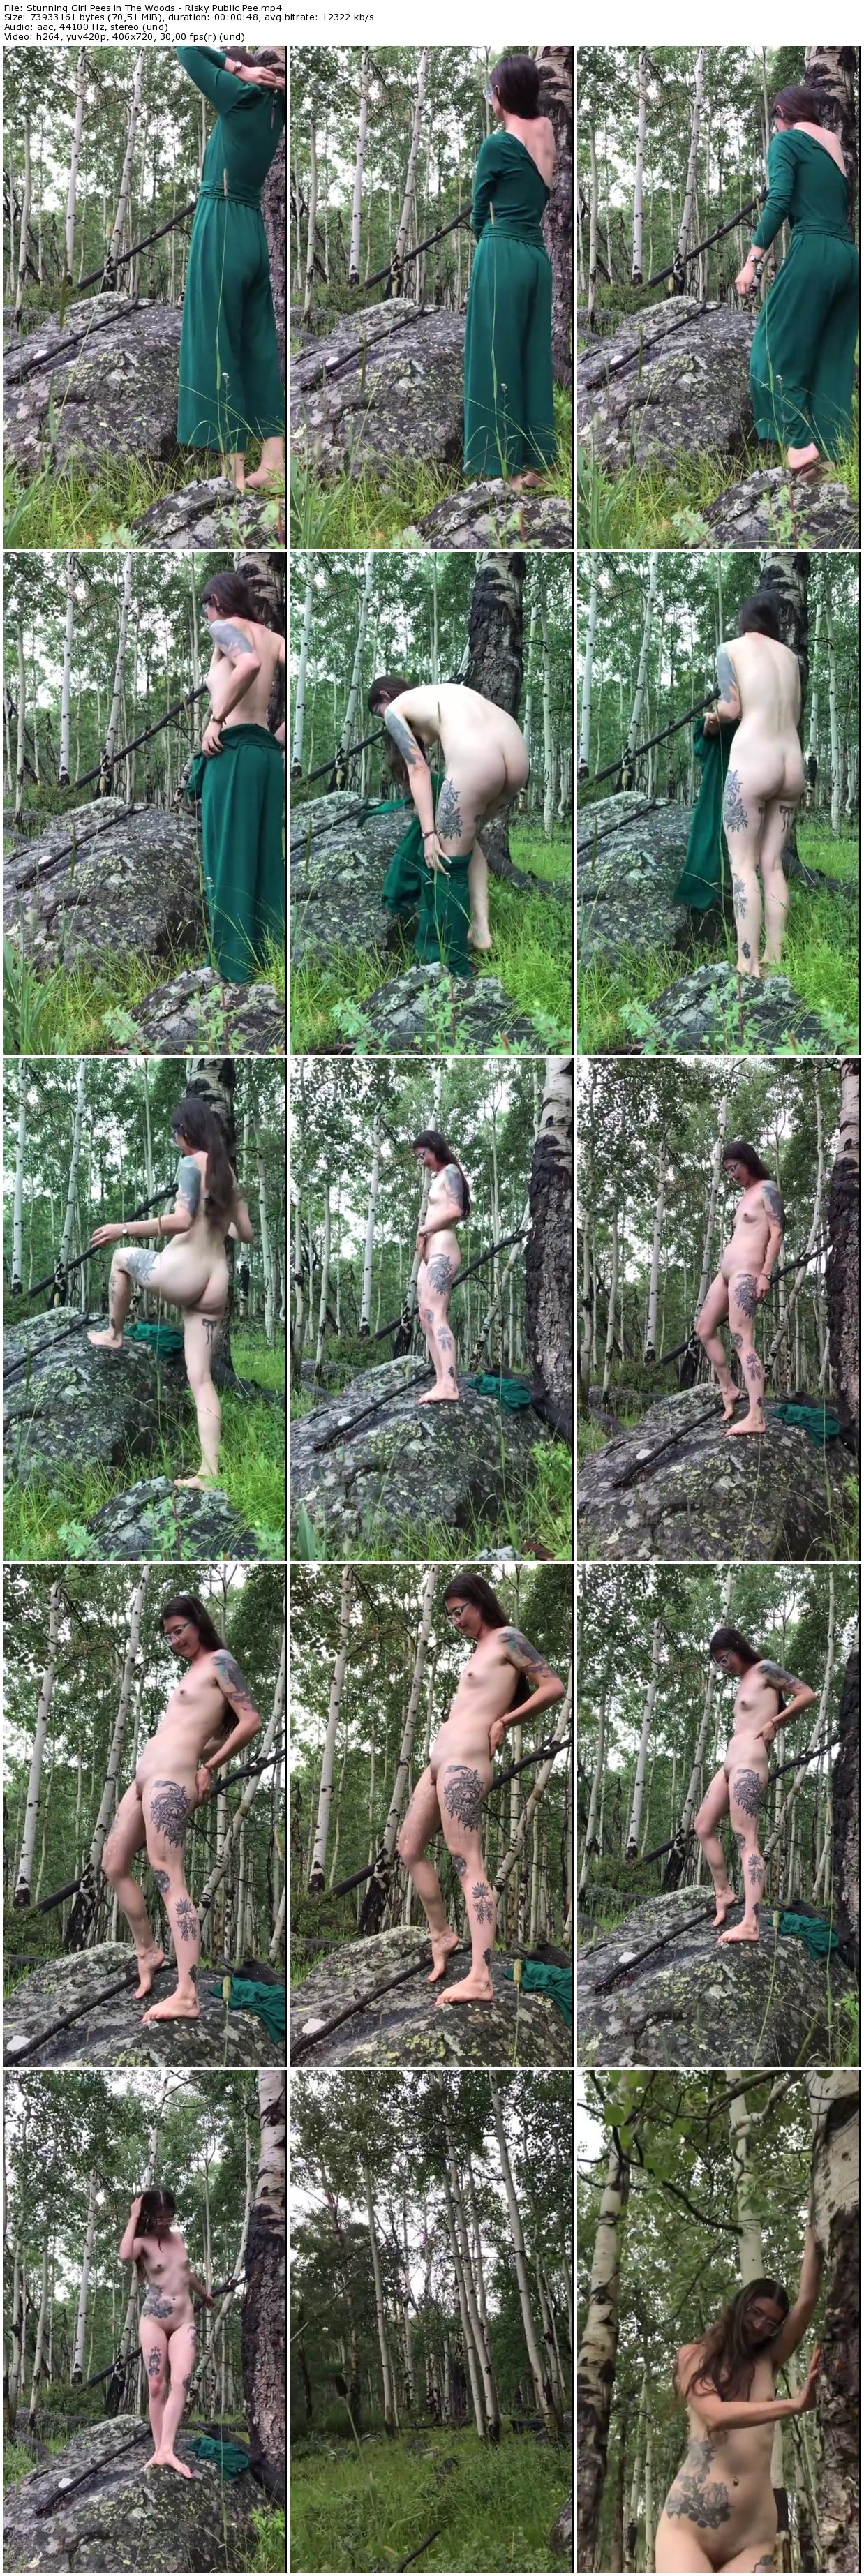 Stunning Girl Pees in The Woods - Risky Public Pee_thumb.jpg